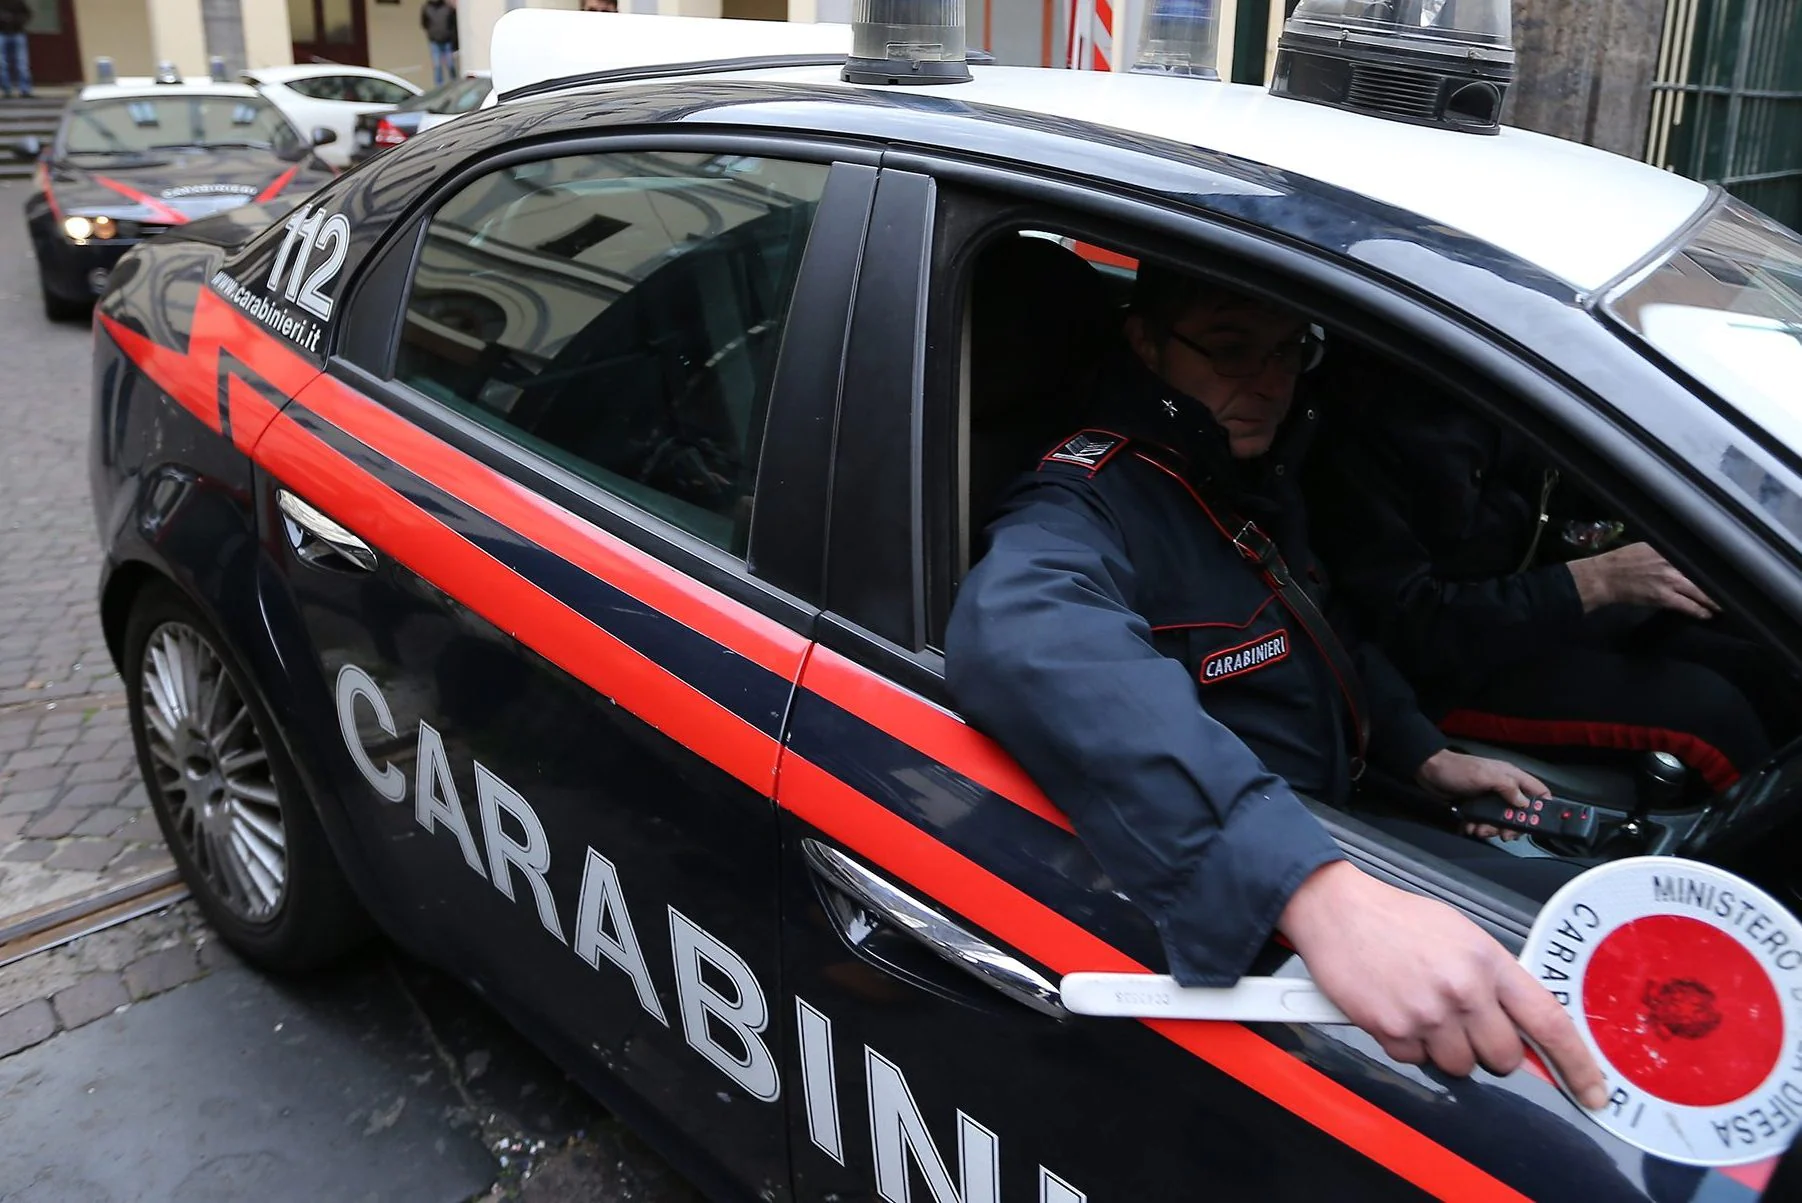 4189 allievi carabinieri, carabinieri schierati